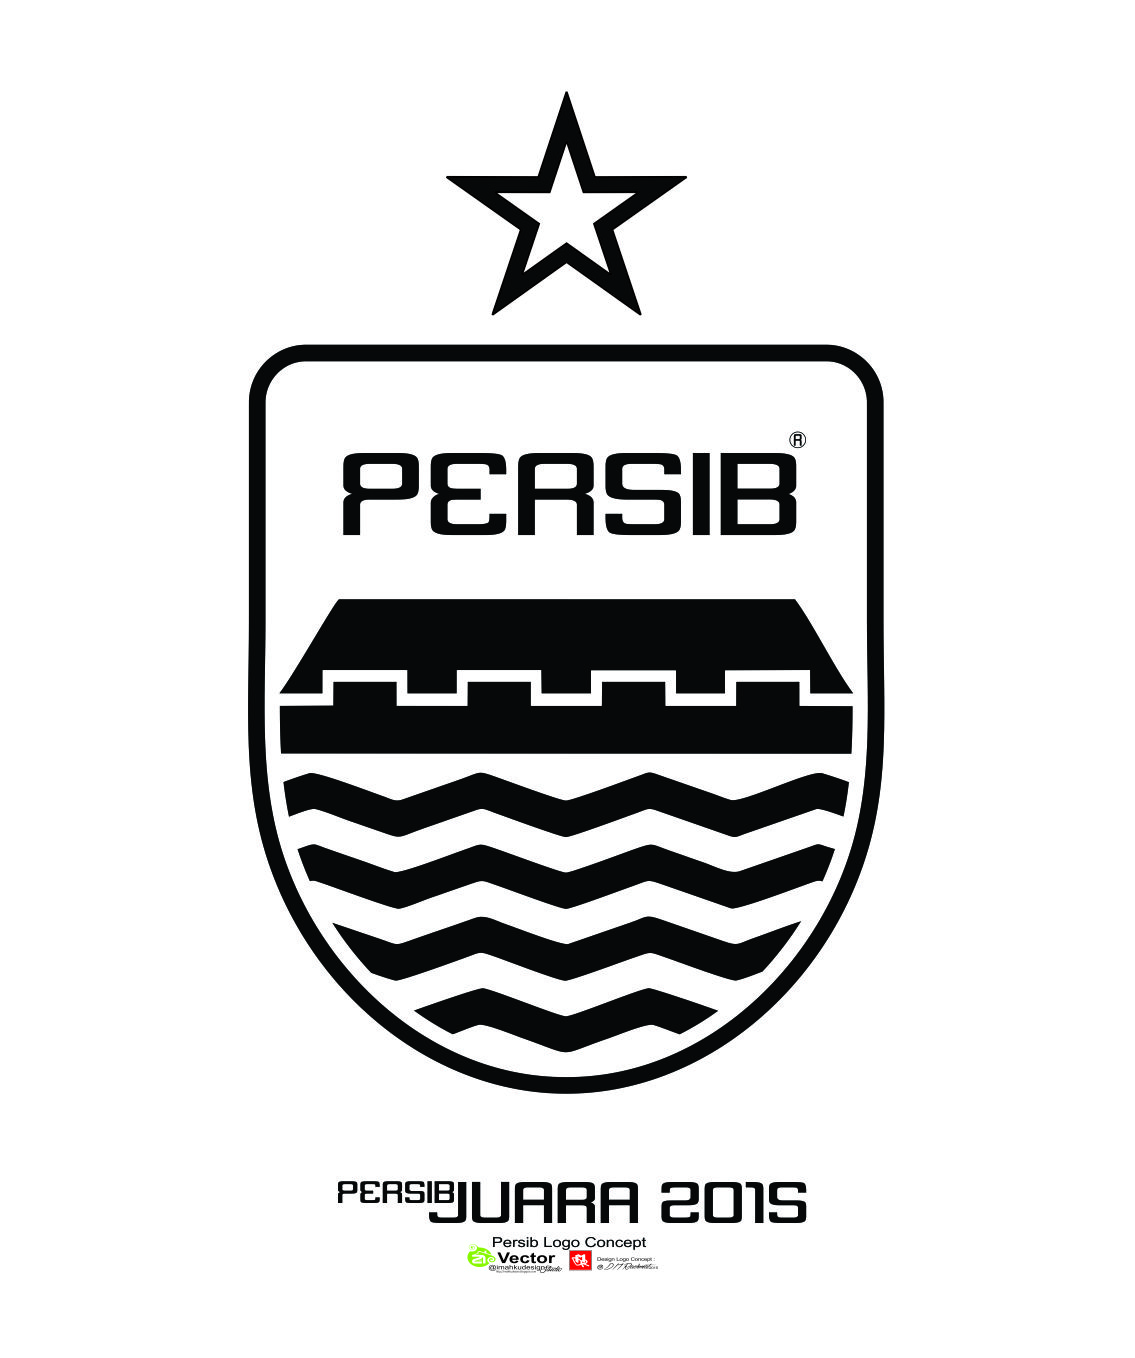 Lihat Viking Persib Pictures Free Download 100 Logo Gambar 